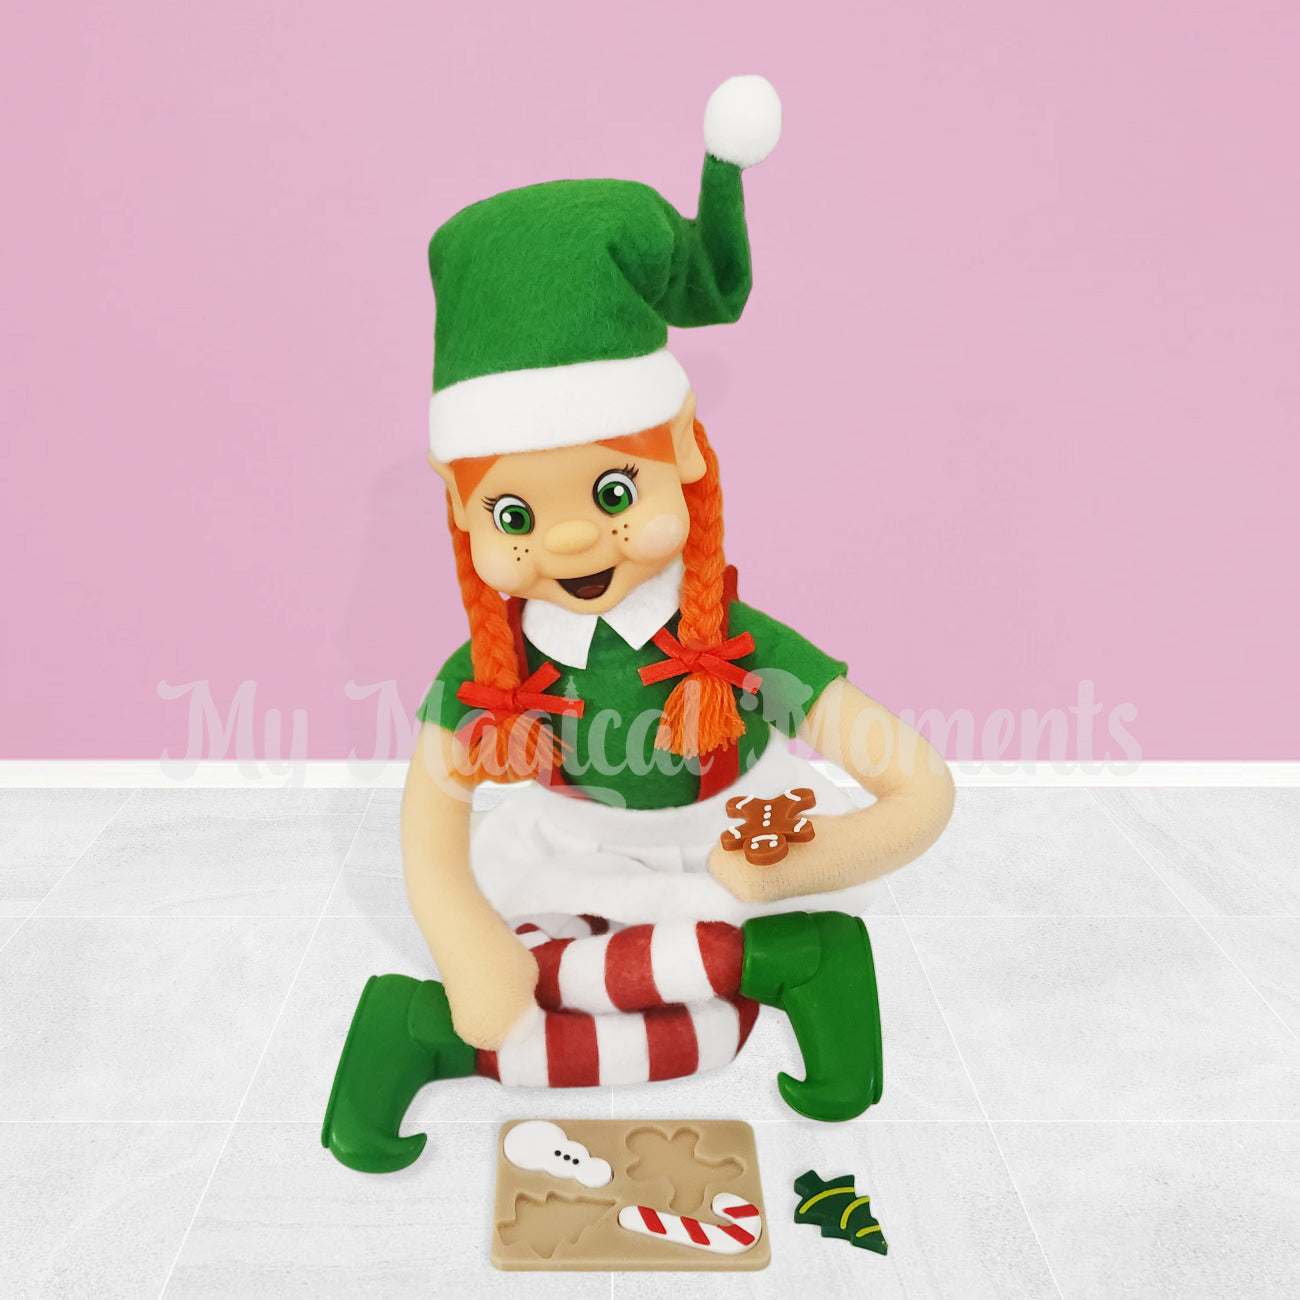 Orange hair girl elf doing a puzzle prop on the floor